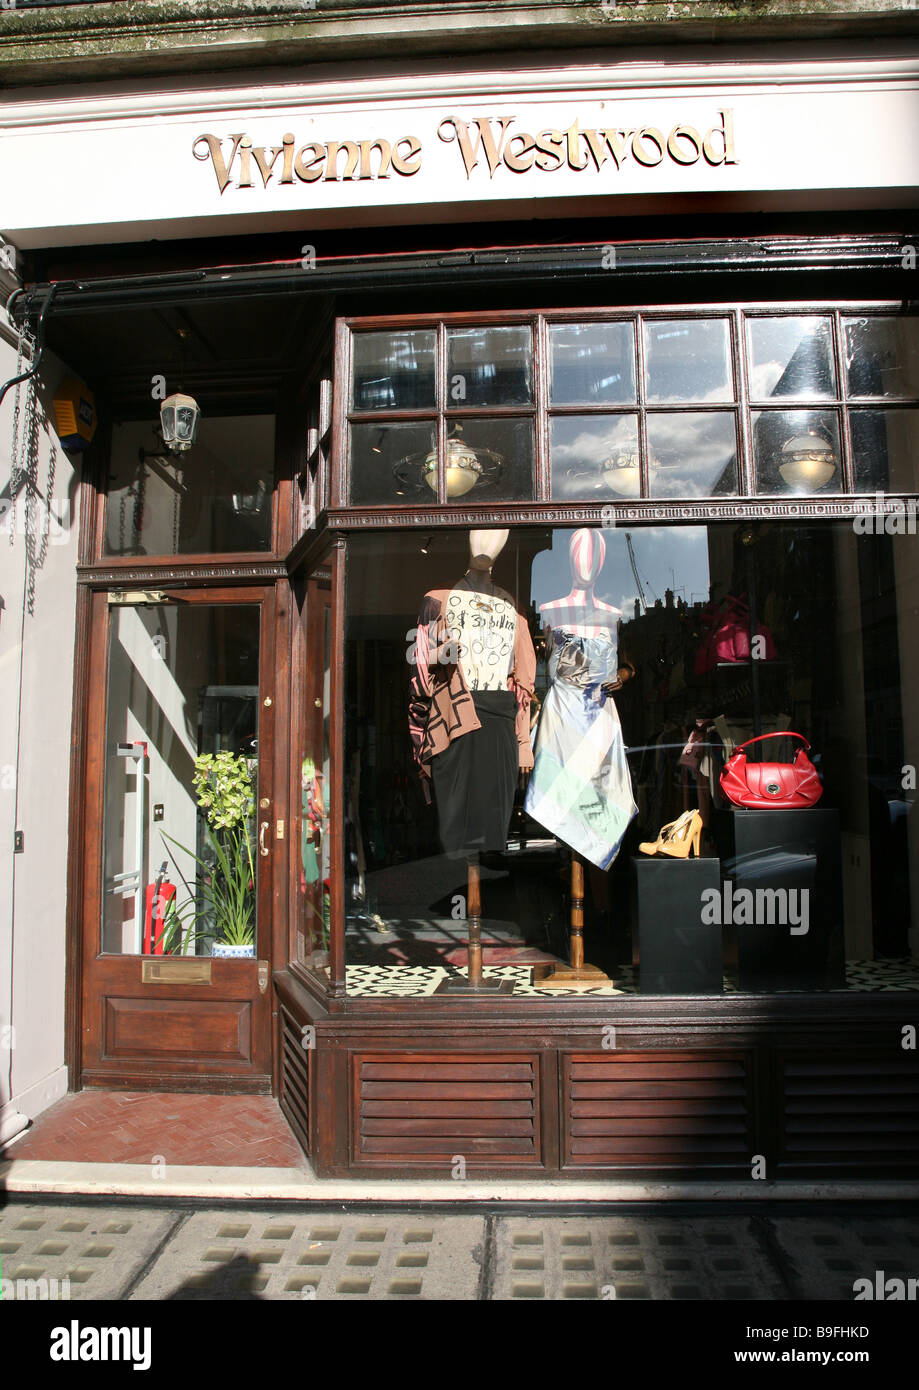 Vivienne Westwood shop in Mayfair, London Stock Photo - Alamy